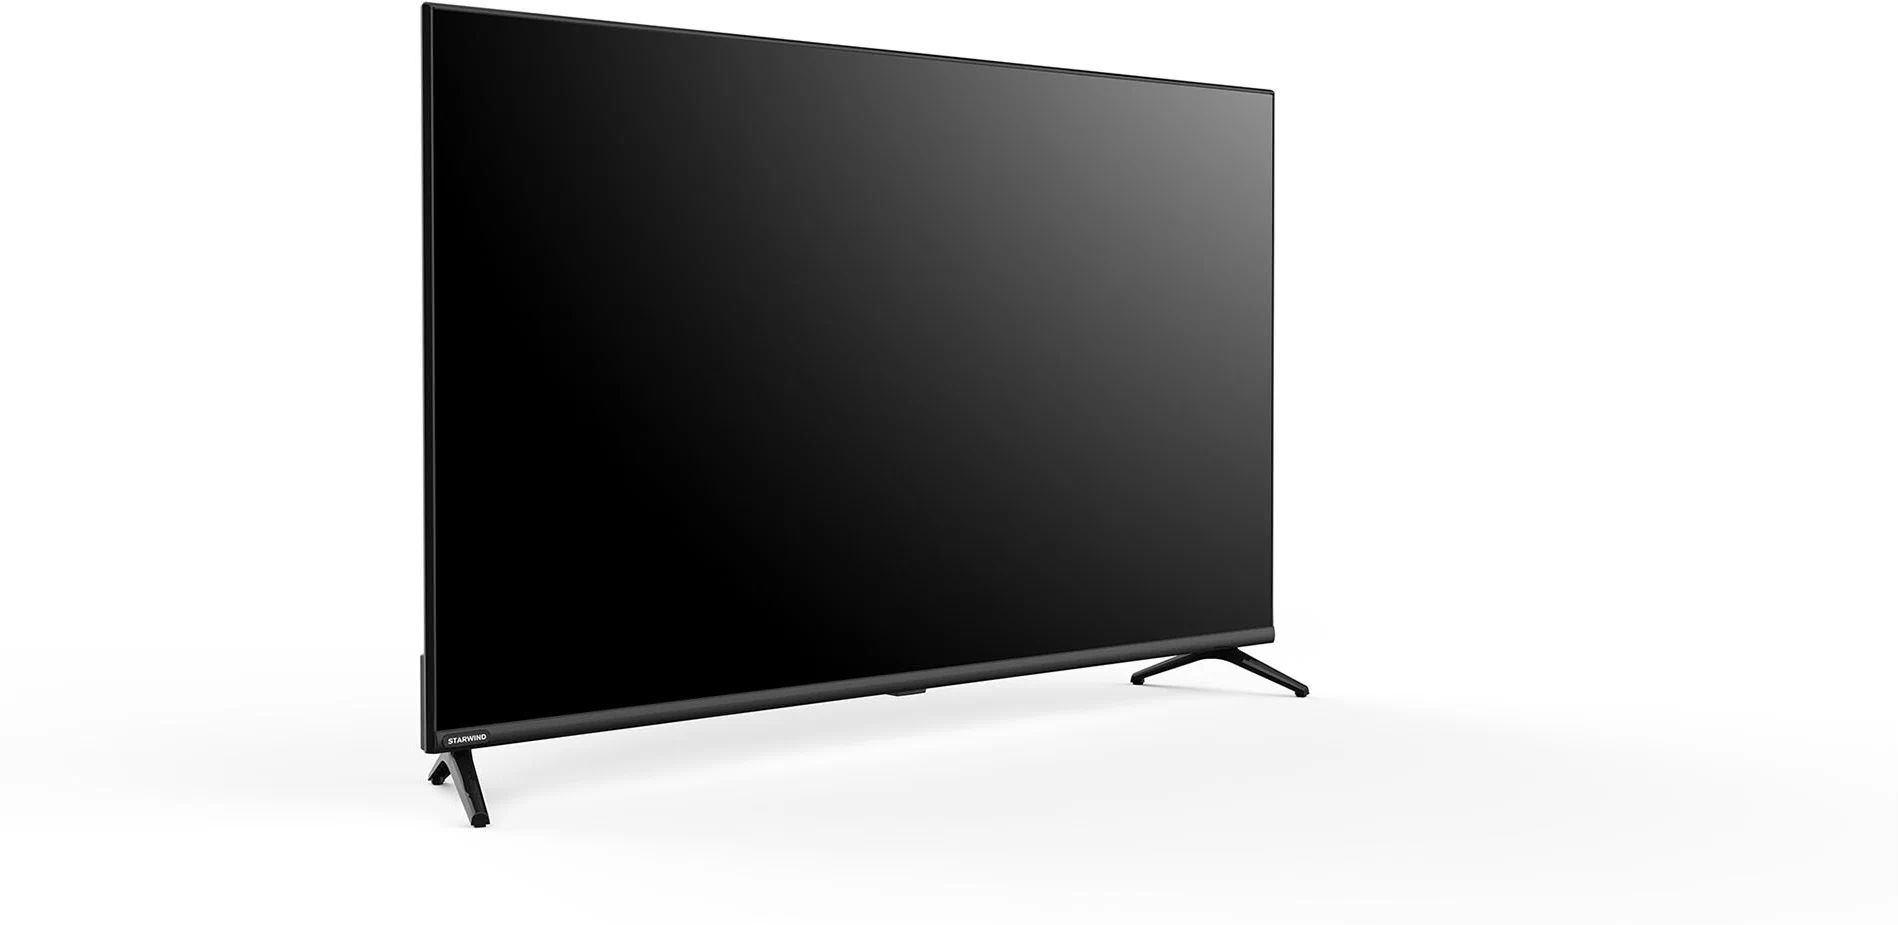 Телевизор Starwind SW-LED43UG405 черный телевизор 24 starwind sw led24bg202 hd 1366x768 черный